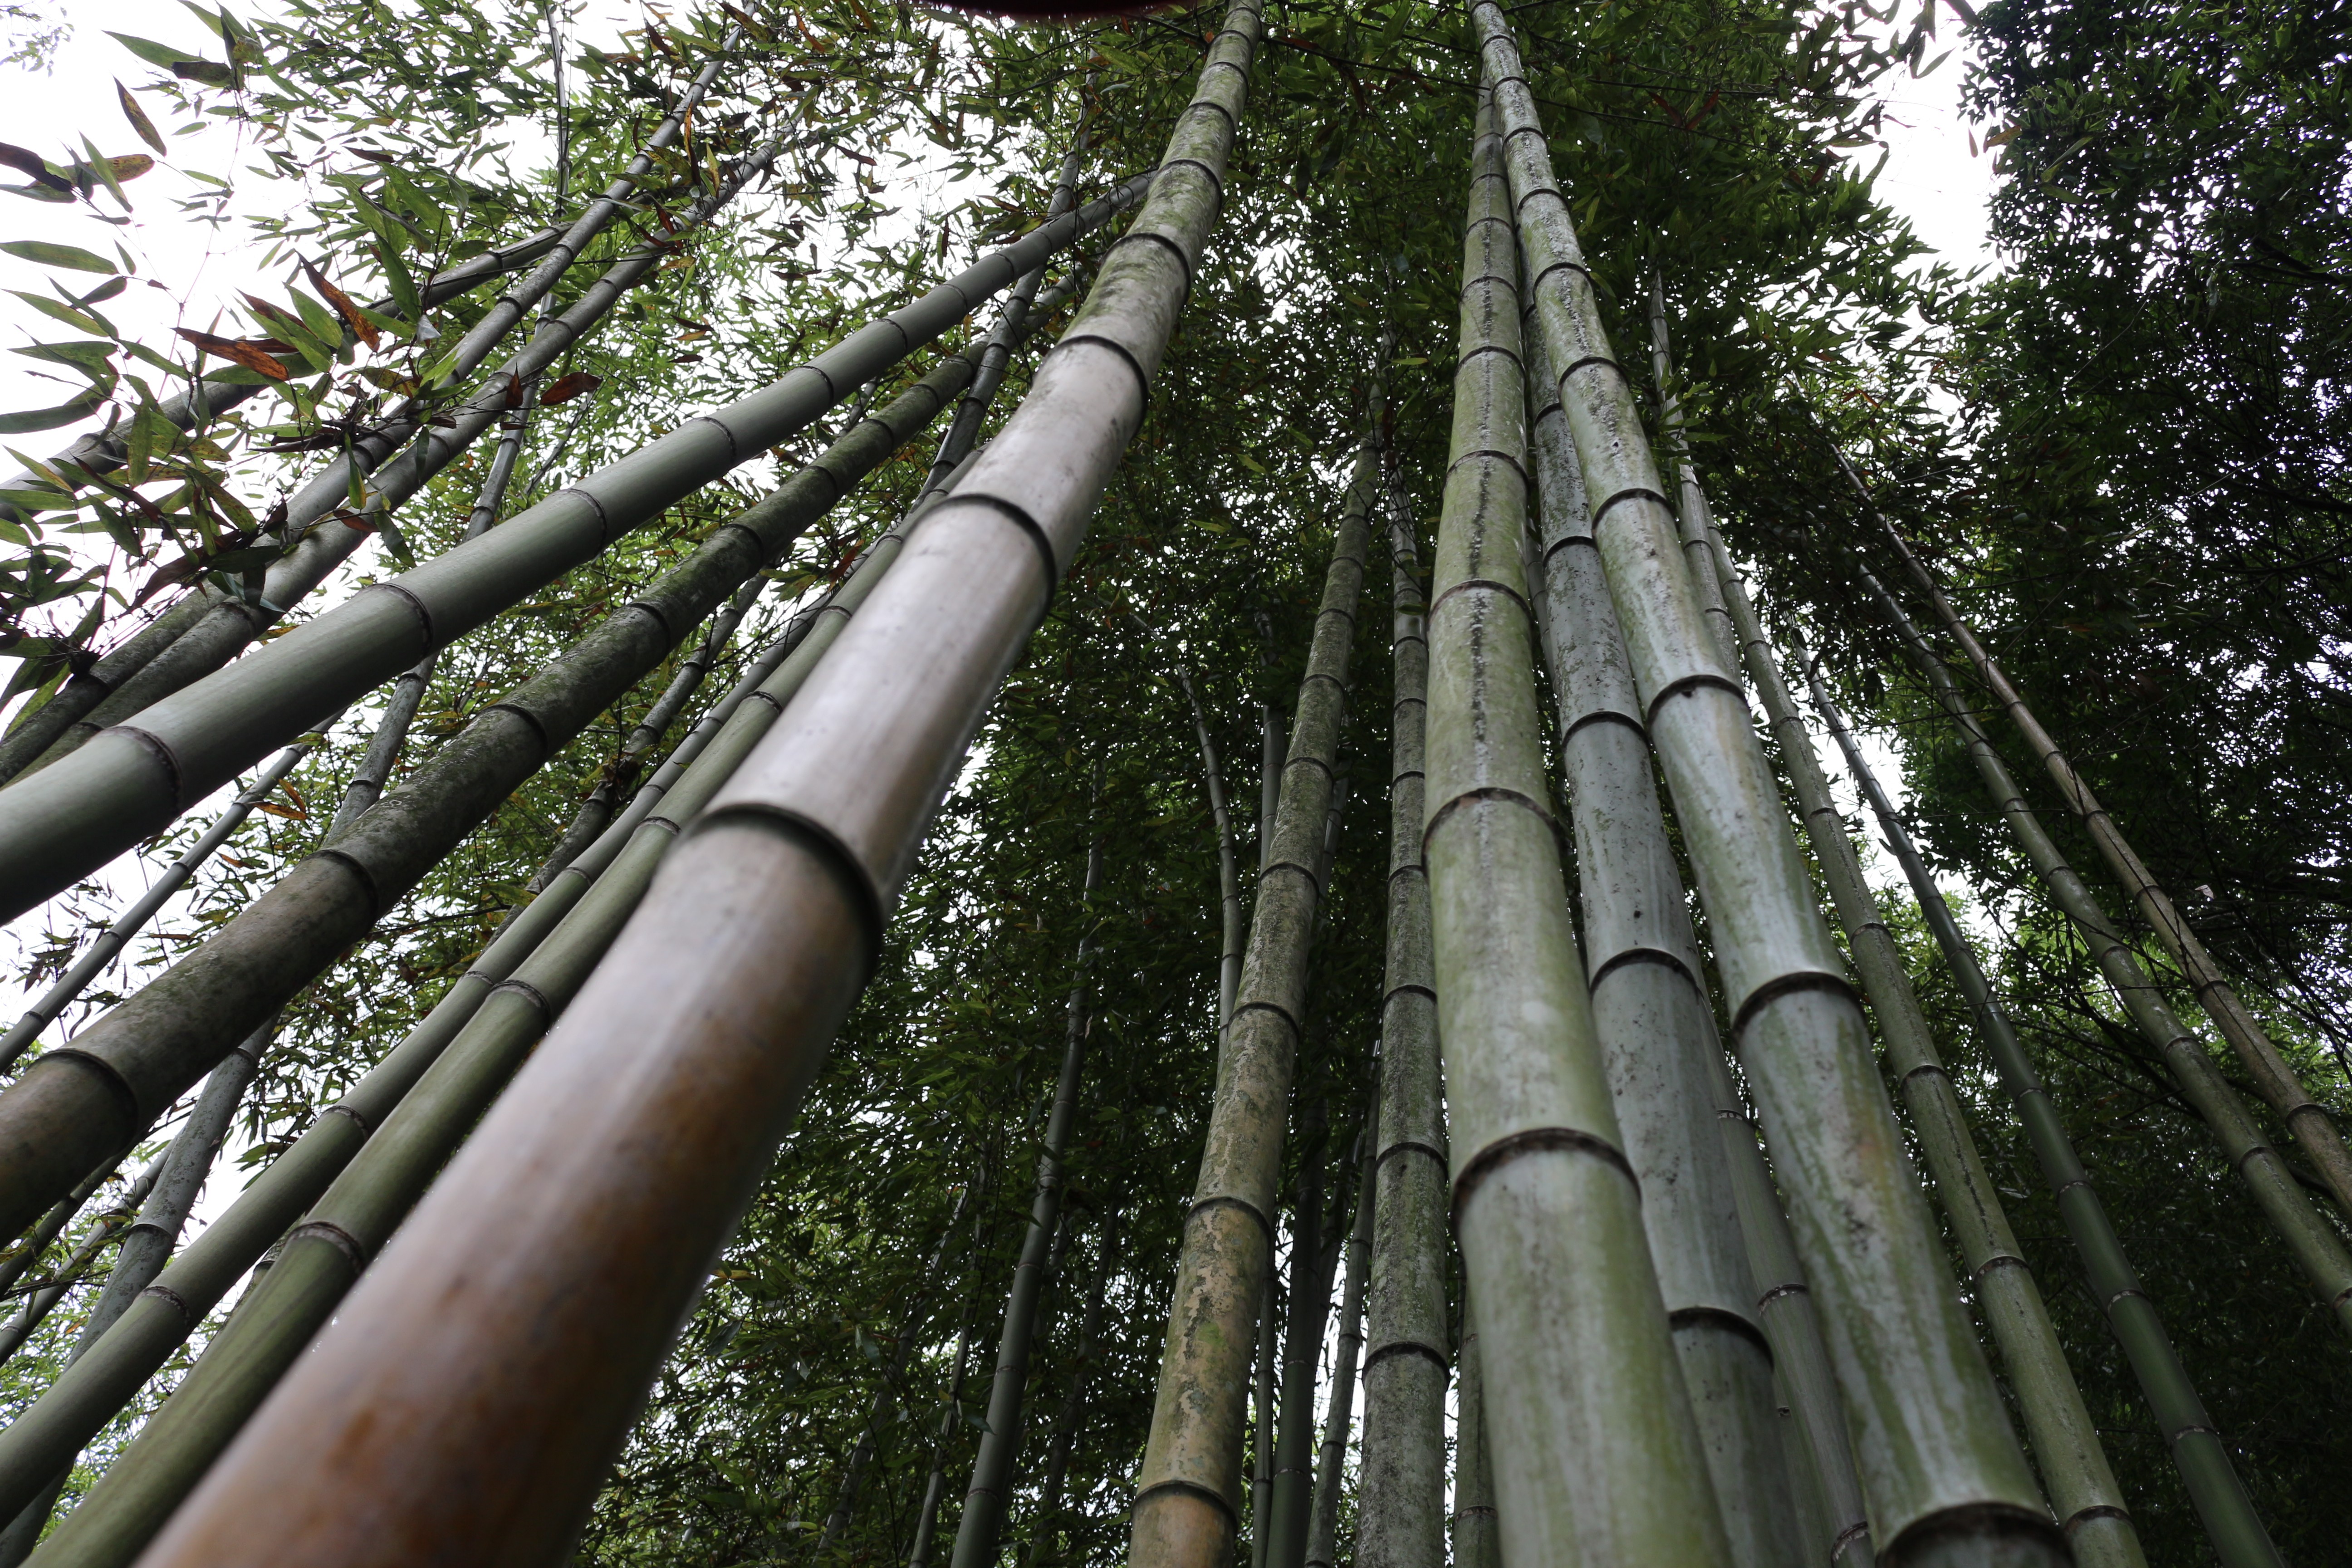 General 5184x3456 bamboo forest landscape Japanese Garden